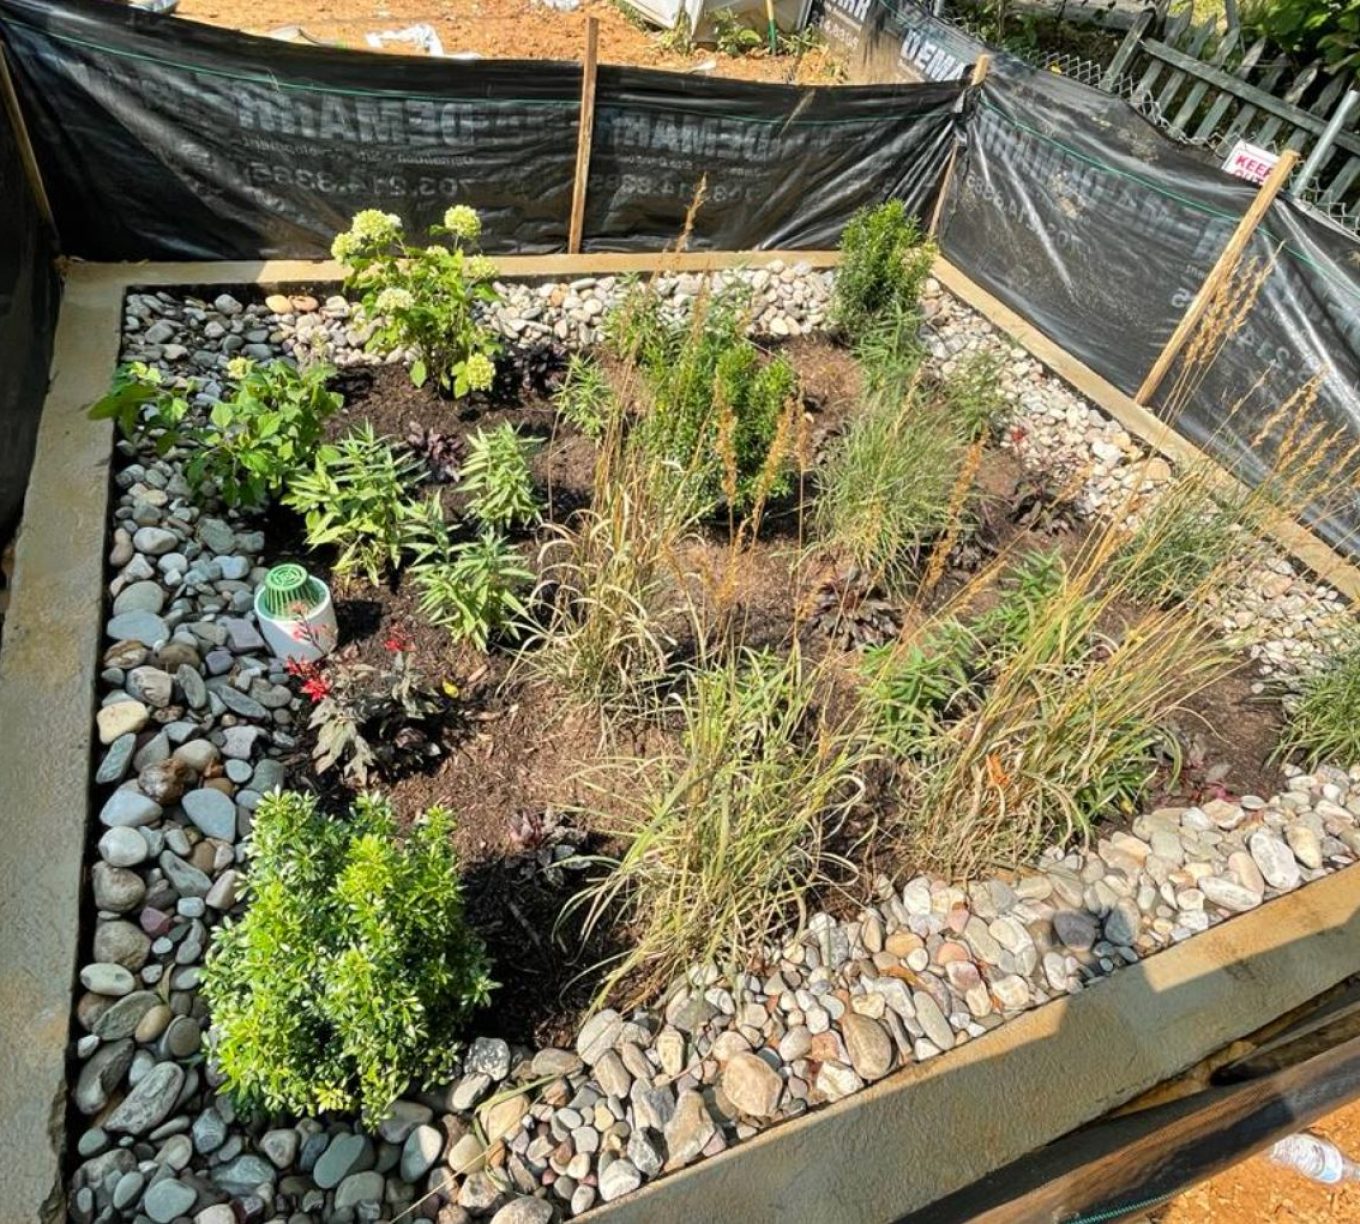 Detached Urban Bioretention Planter Box for Stormwater Management